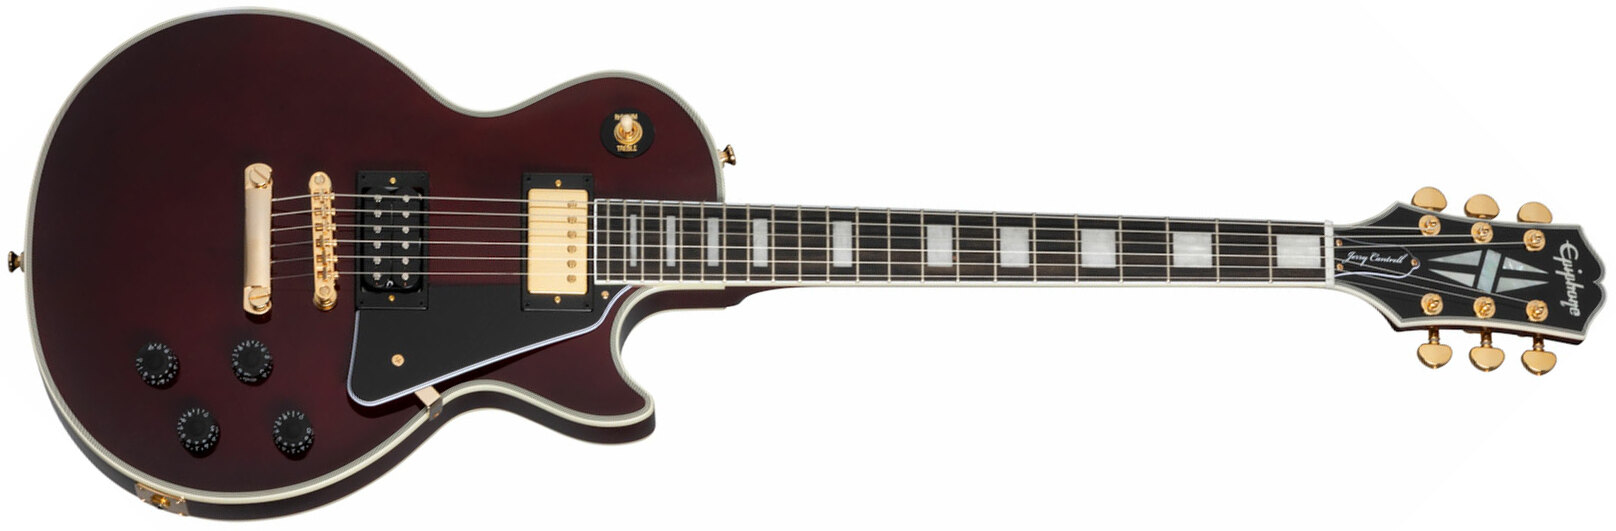 Epiphone Jerry Cantrell Les Paul Custom Wino Signature 2h Ht Eb - Wine Red - Guitarra eléctrica de corte único. - Main picture